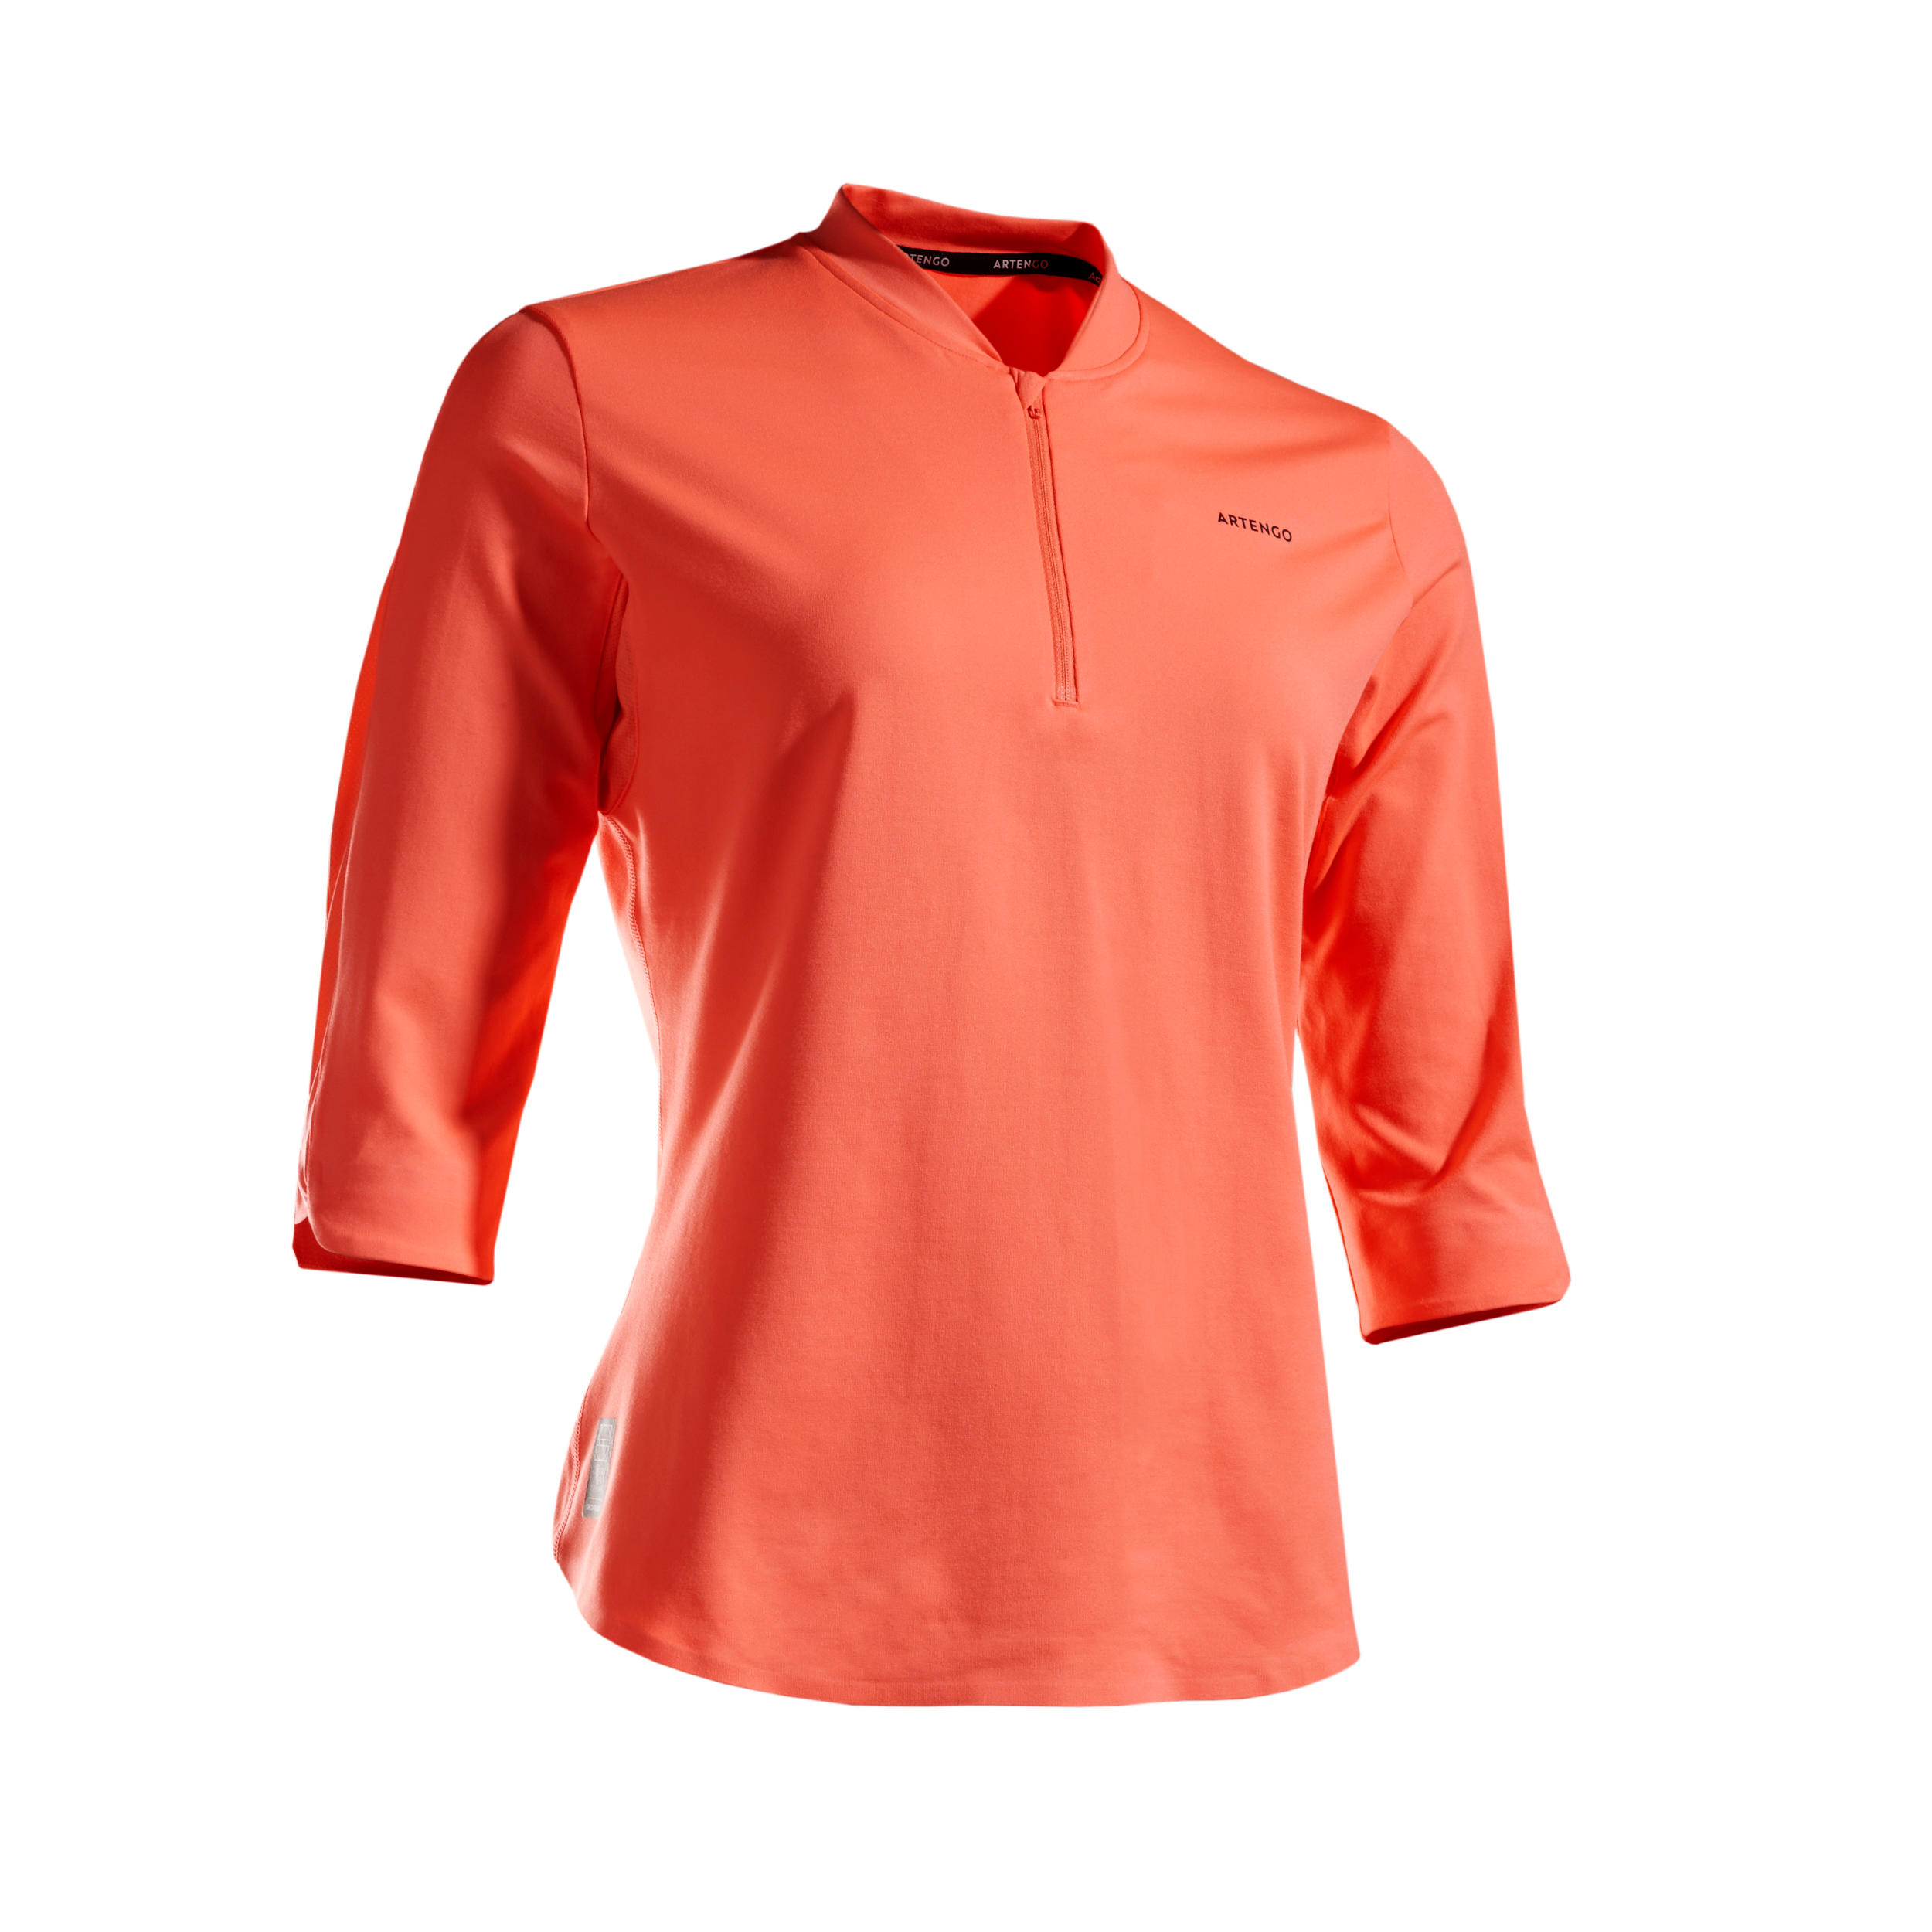 ARTENGO Women's 3/4 Sleeve Tennis T-Shirt Dry 900 - Coral